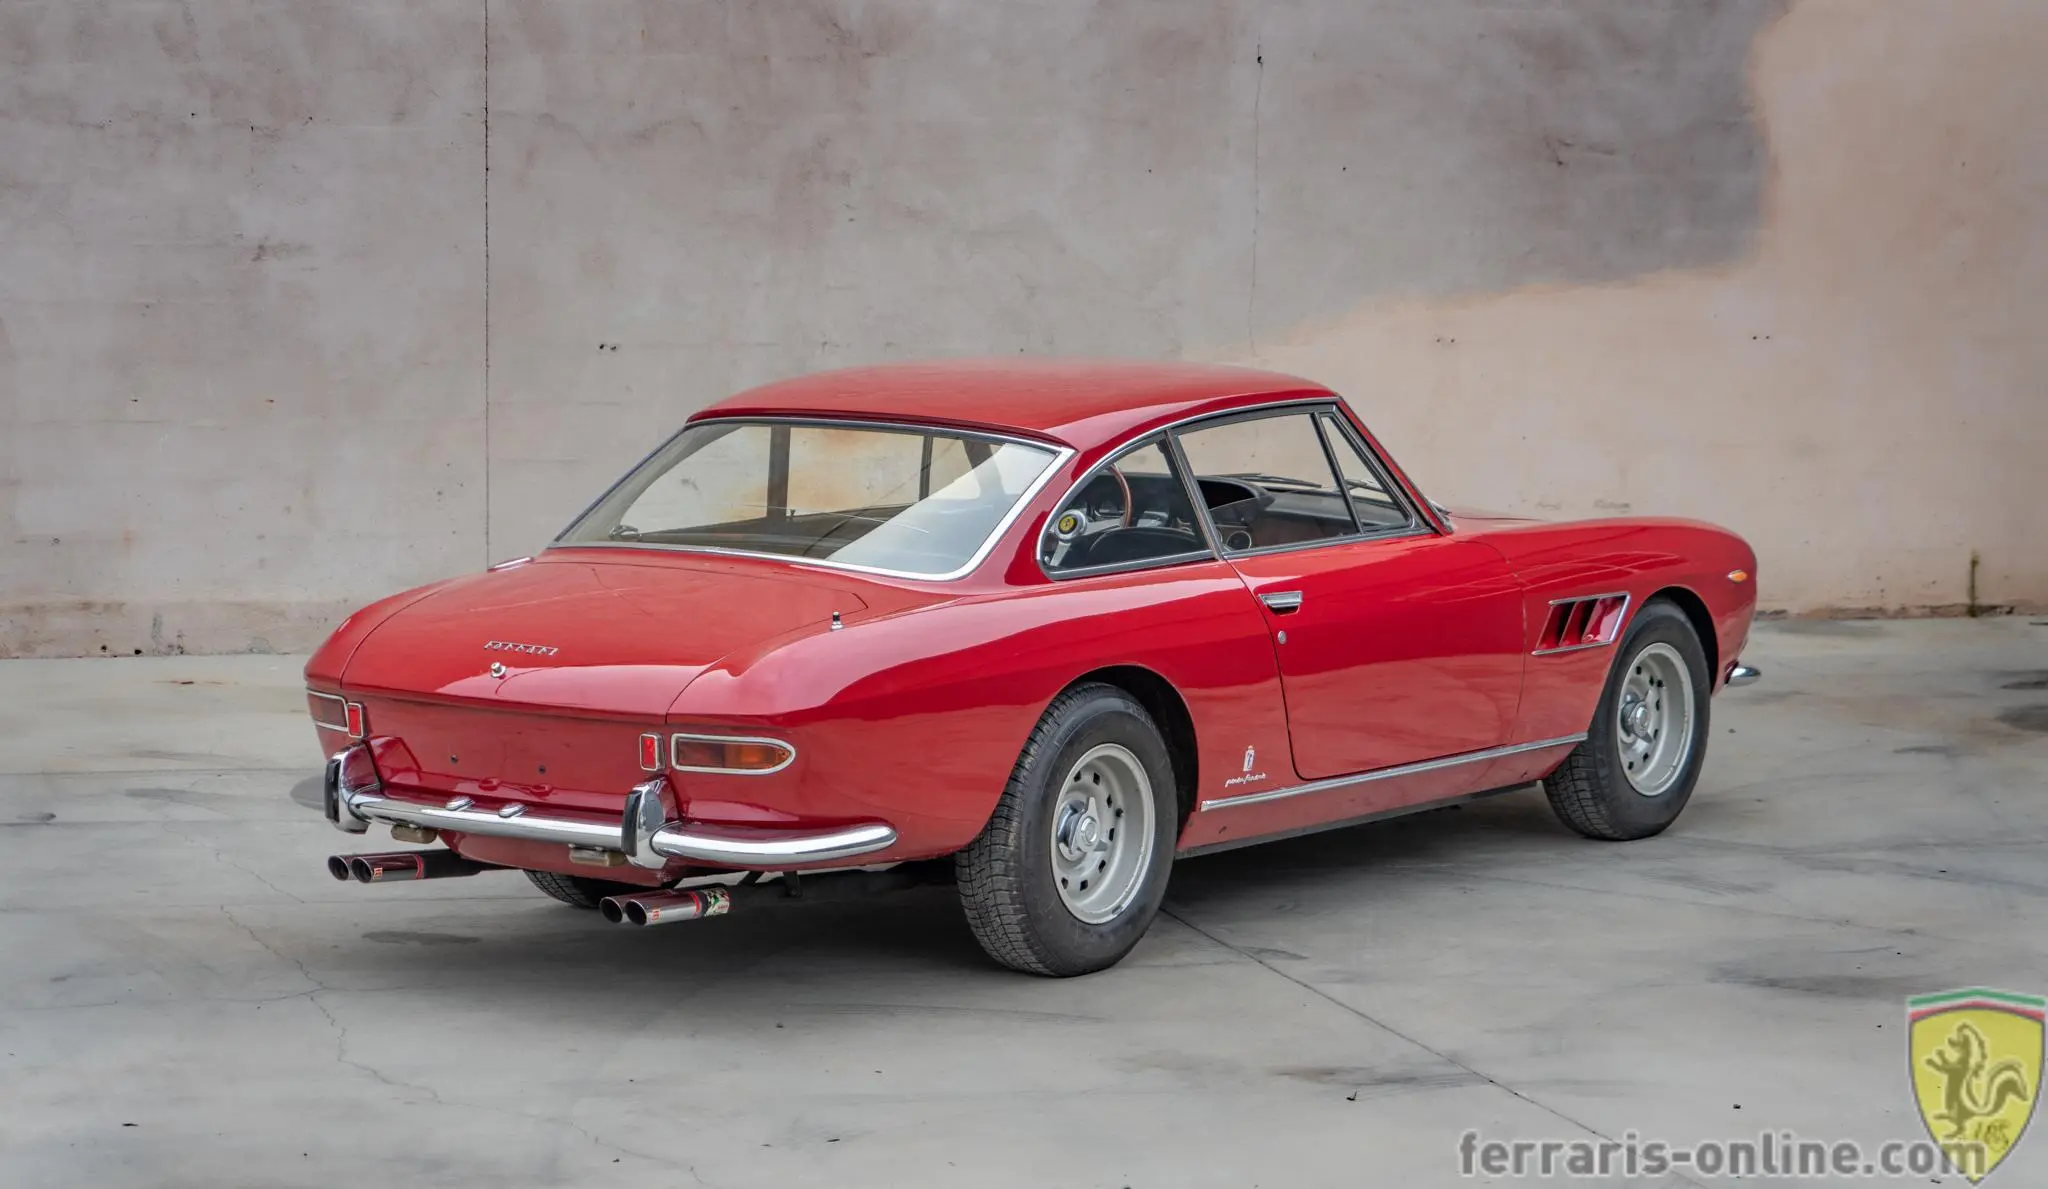 ferrari 330 gt for sale - How much is a Ferrari 330 GT worth